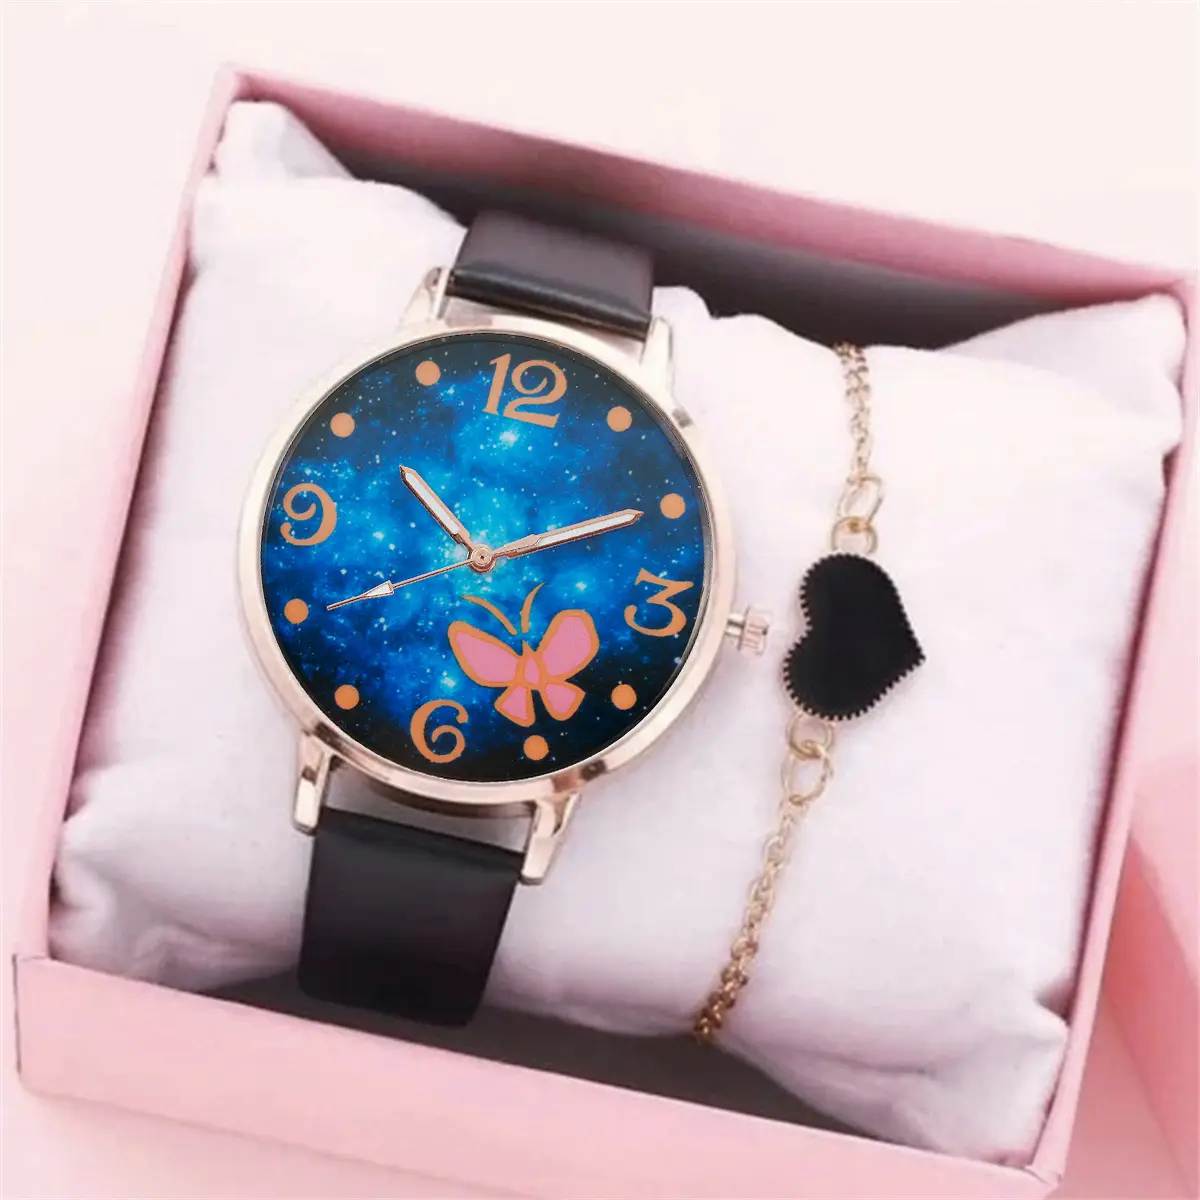 YuSa516 फ़ैक्टरी डायरेक्ट हार्ट सिंपल लेडीज़ घड़ी लेदर बेल्ट 2 पीस सेट सुरुचिपूर्ण महिला कंगन घड़ियाँ महिला उपहार